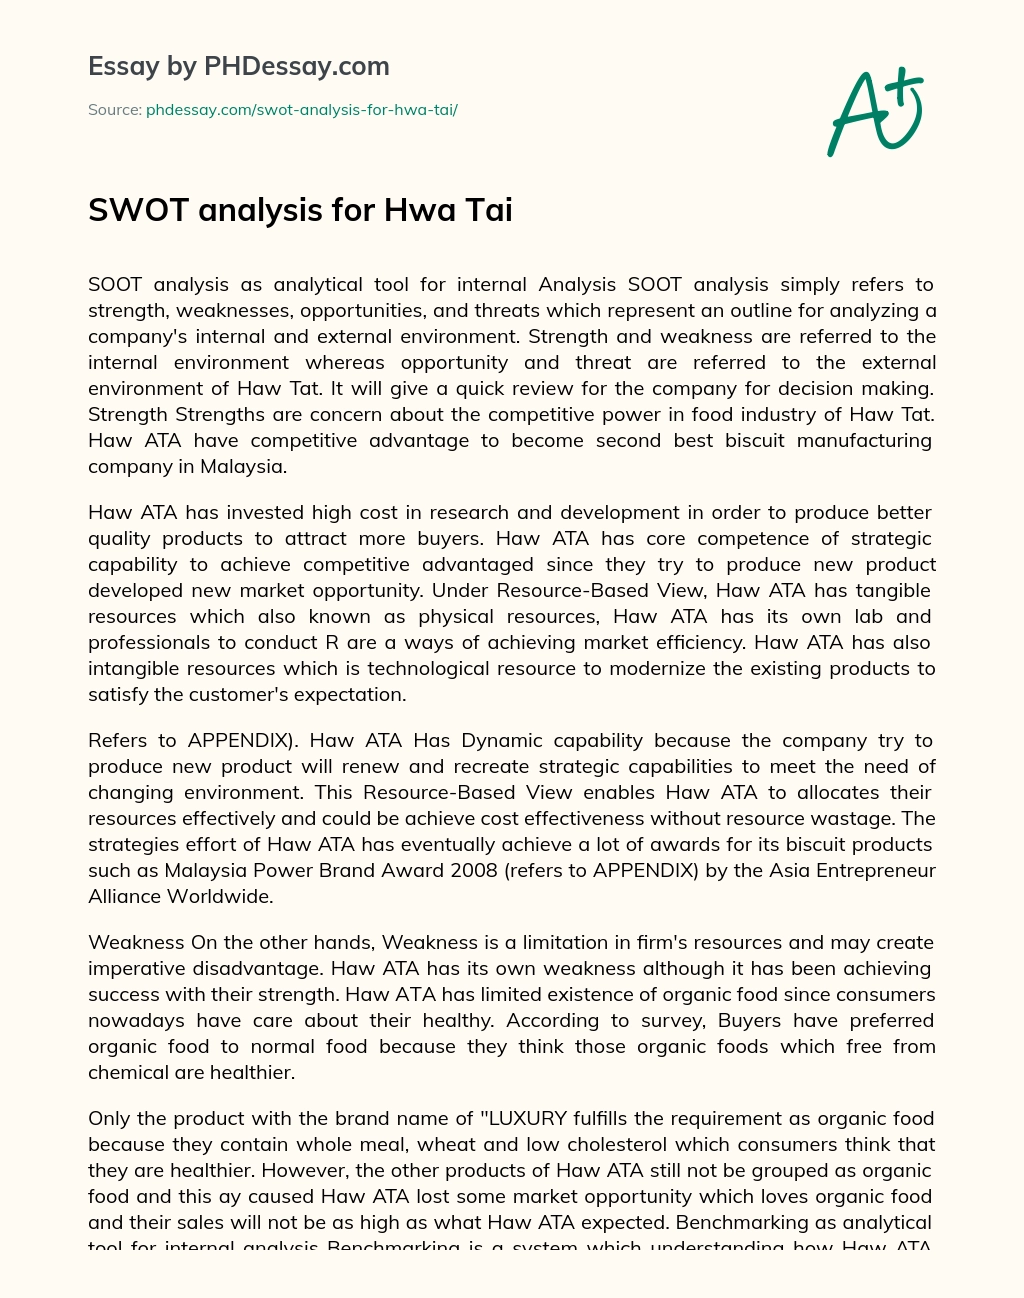 SWOT Analysis for Hwa Tai essay